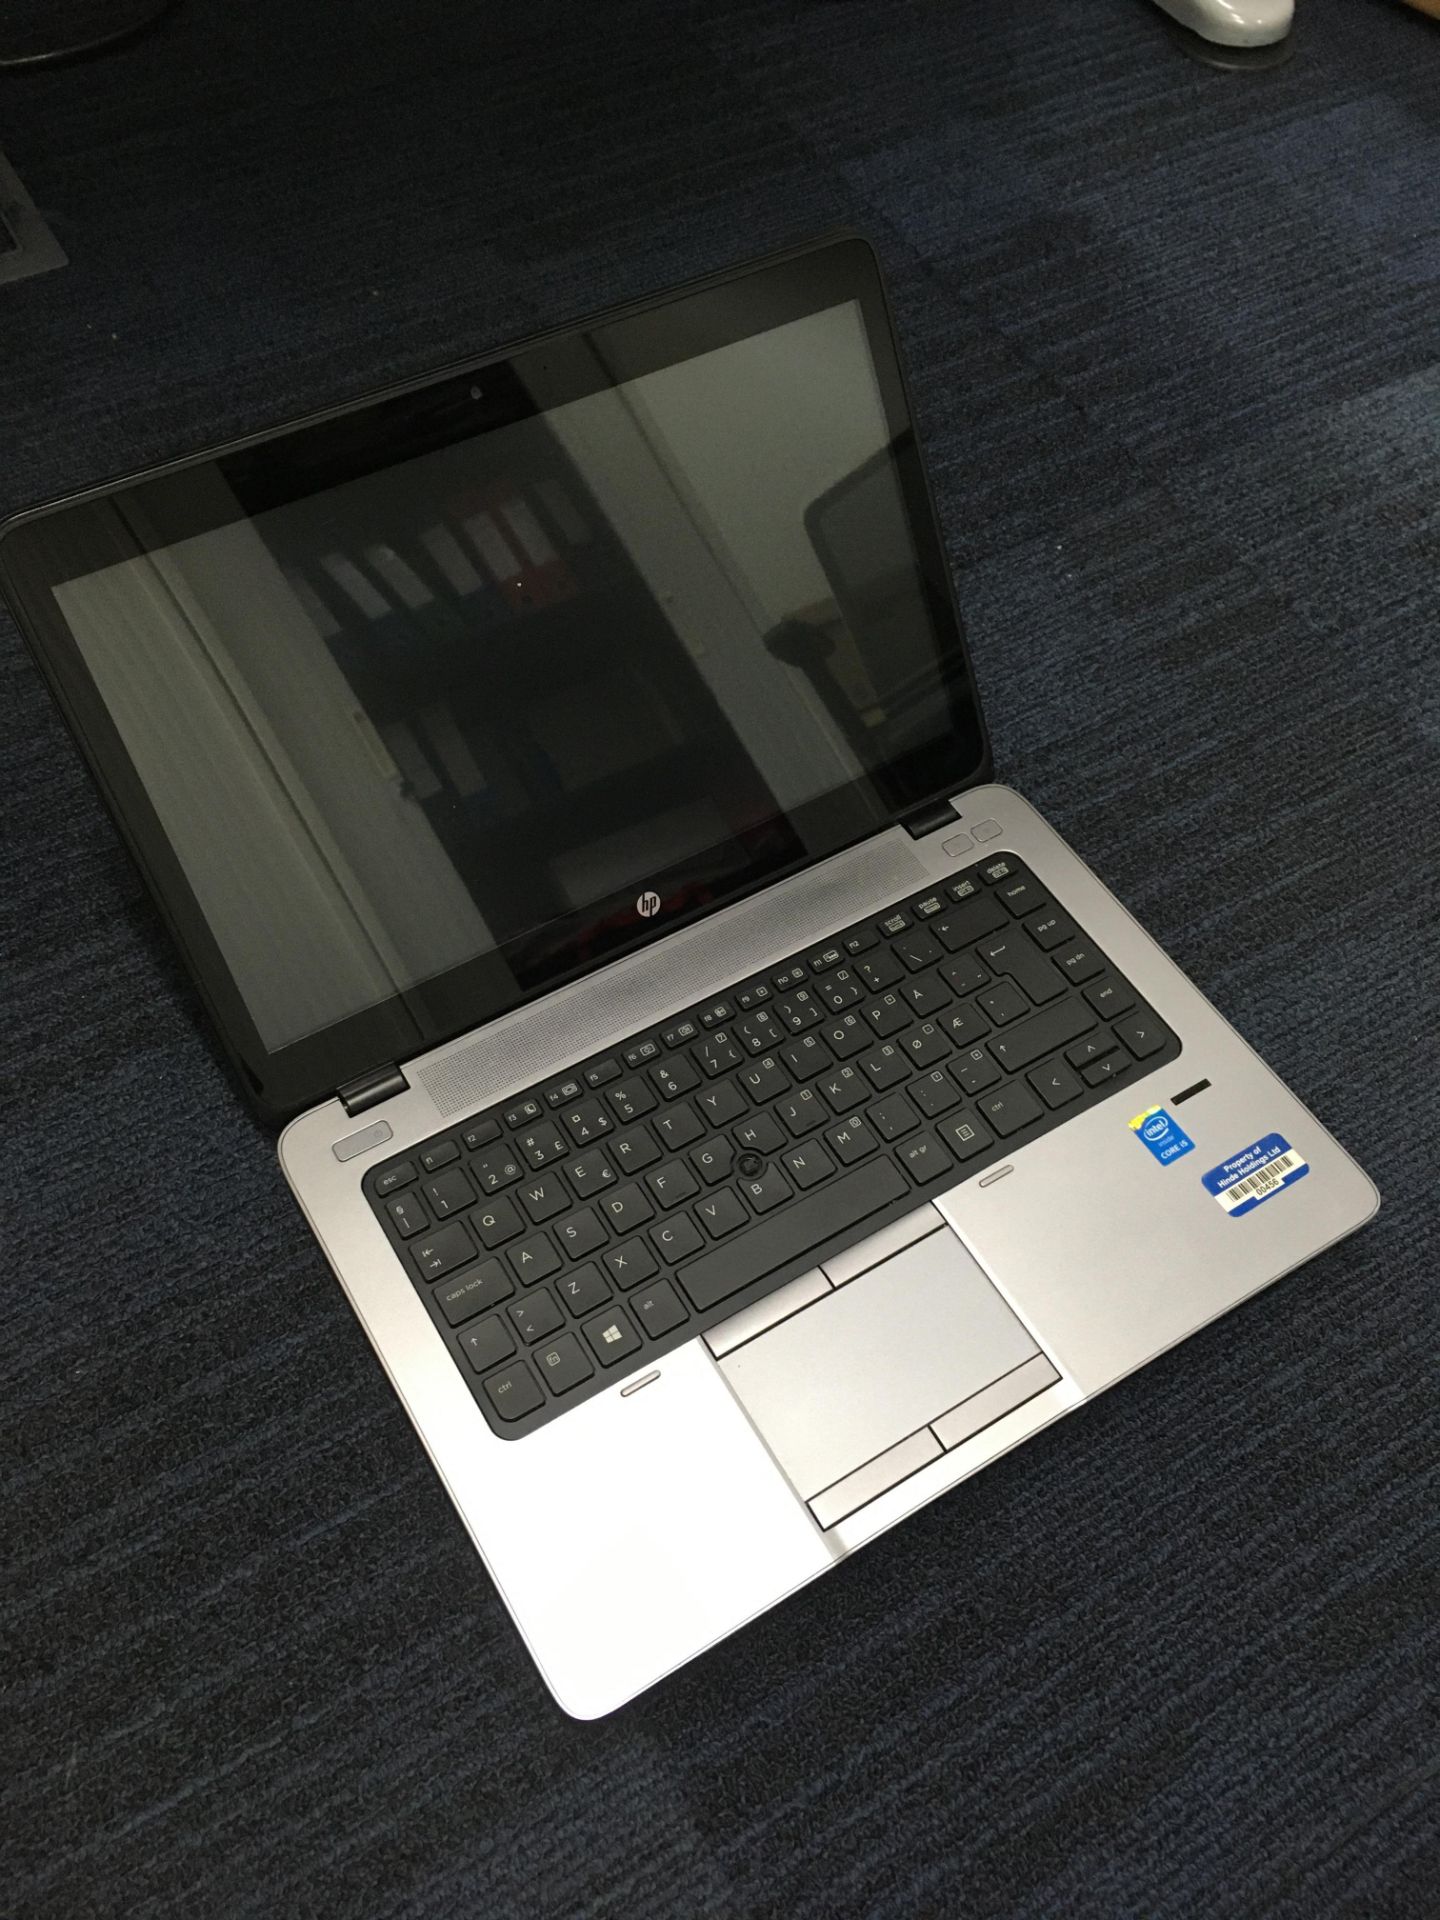 HP EliteBook 840 core i5 blue label - Image 2 of 3